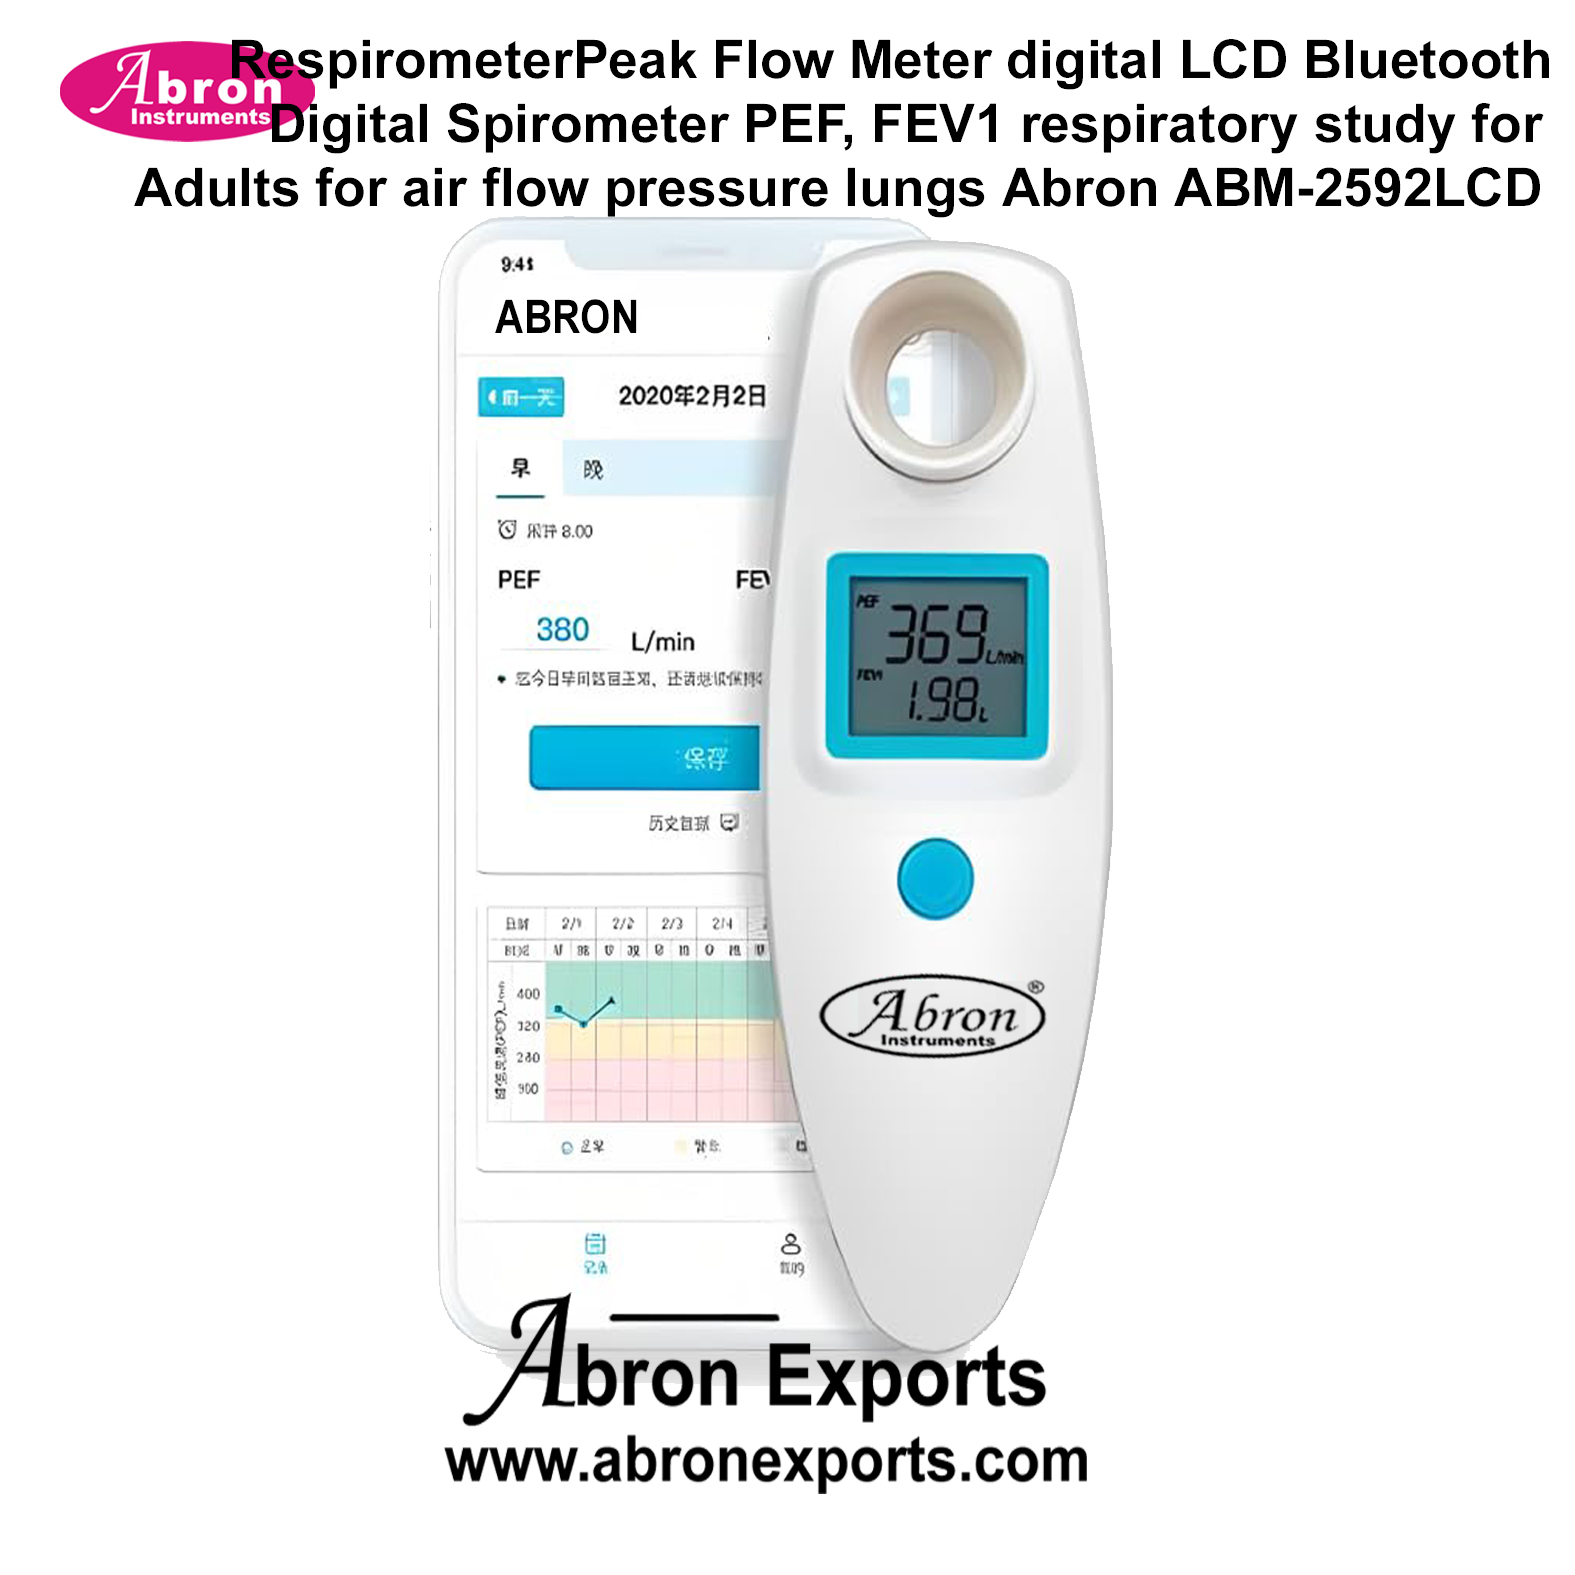 Respirometer Peak Flow Meter digital LCD Bluetooth Digital Spirometer PEF, FEV1 Respiratory Study for Adults for Air Flow Pressure Lungs Abron ABM-2592LCD 